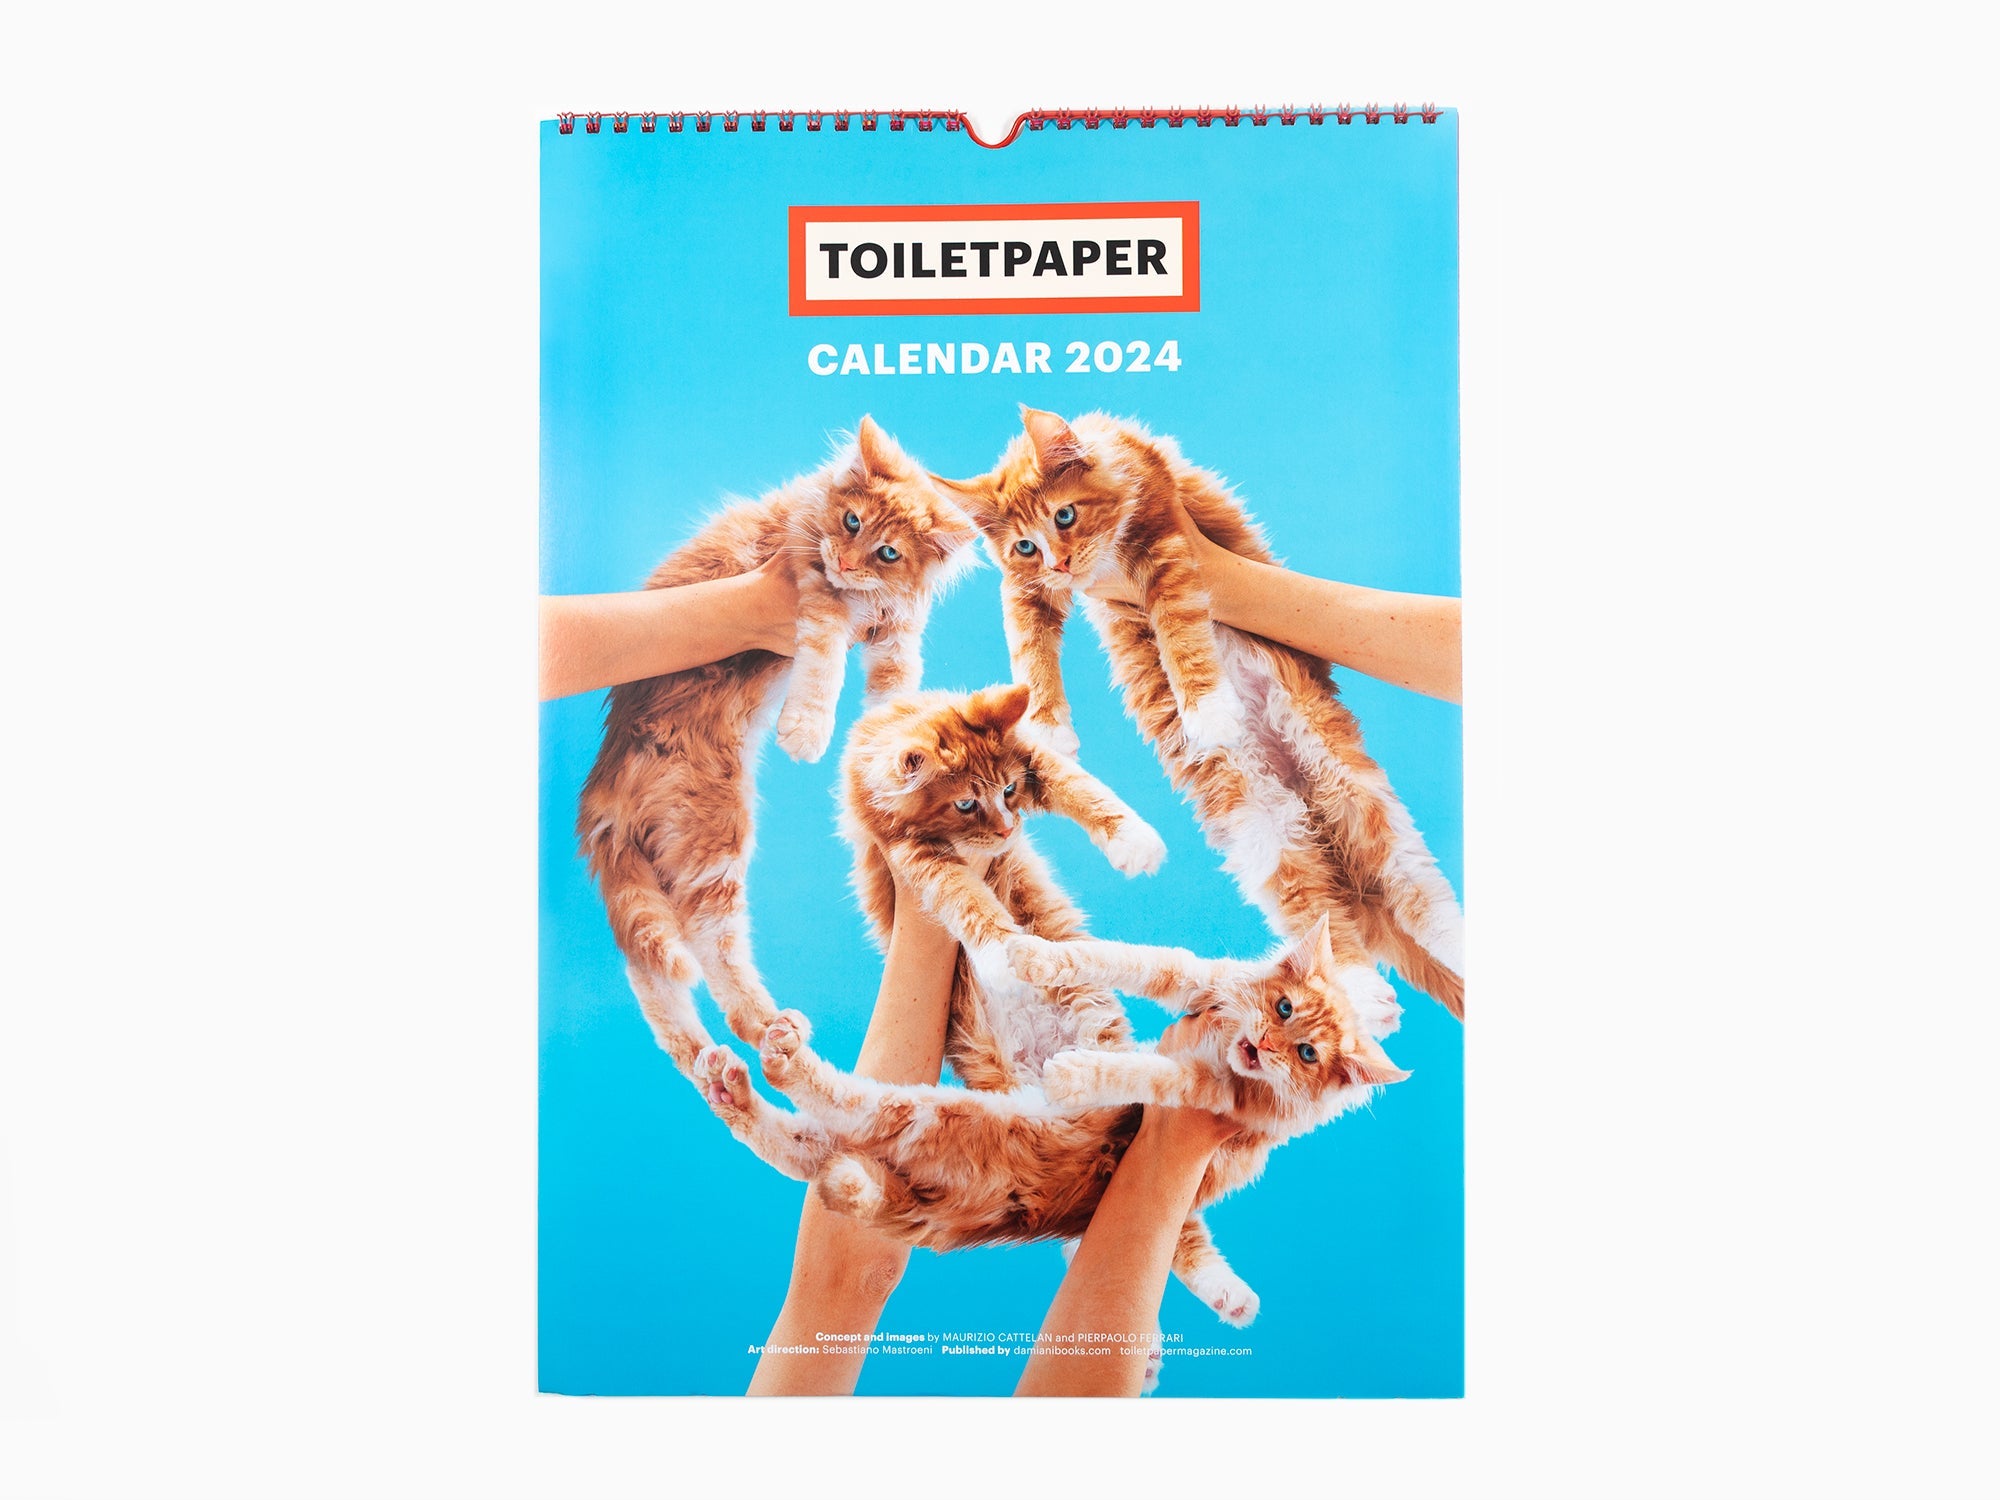 Toiletpaper - Calendrier 2024